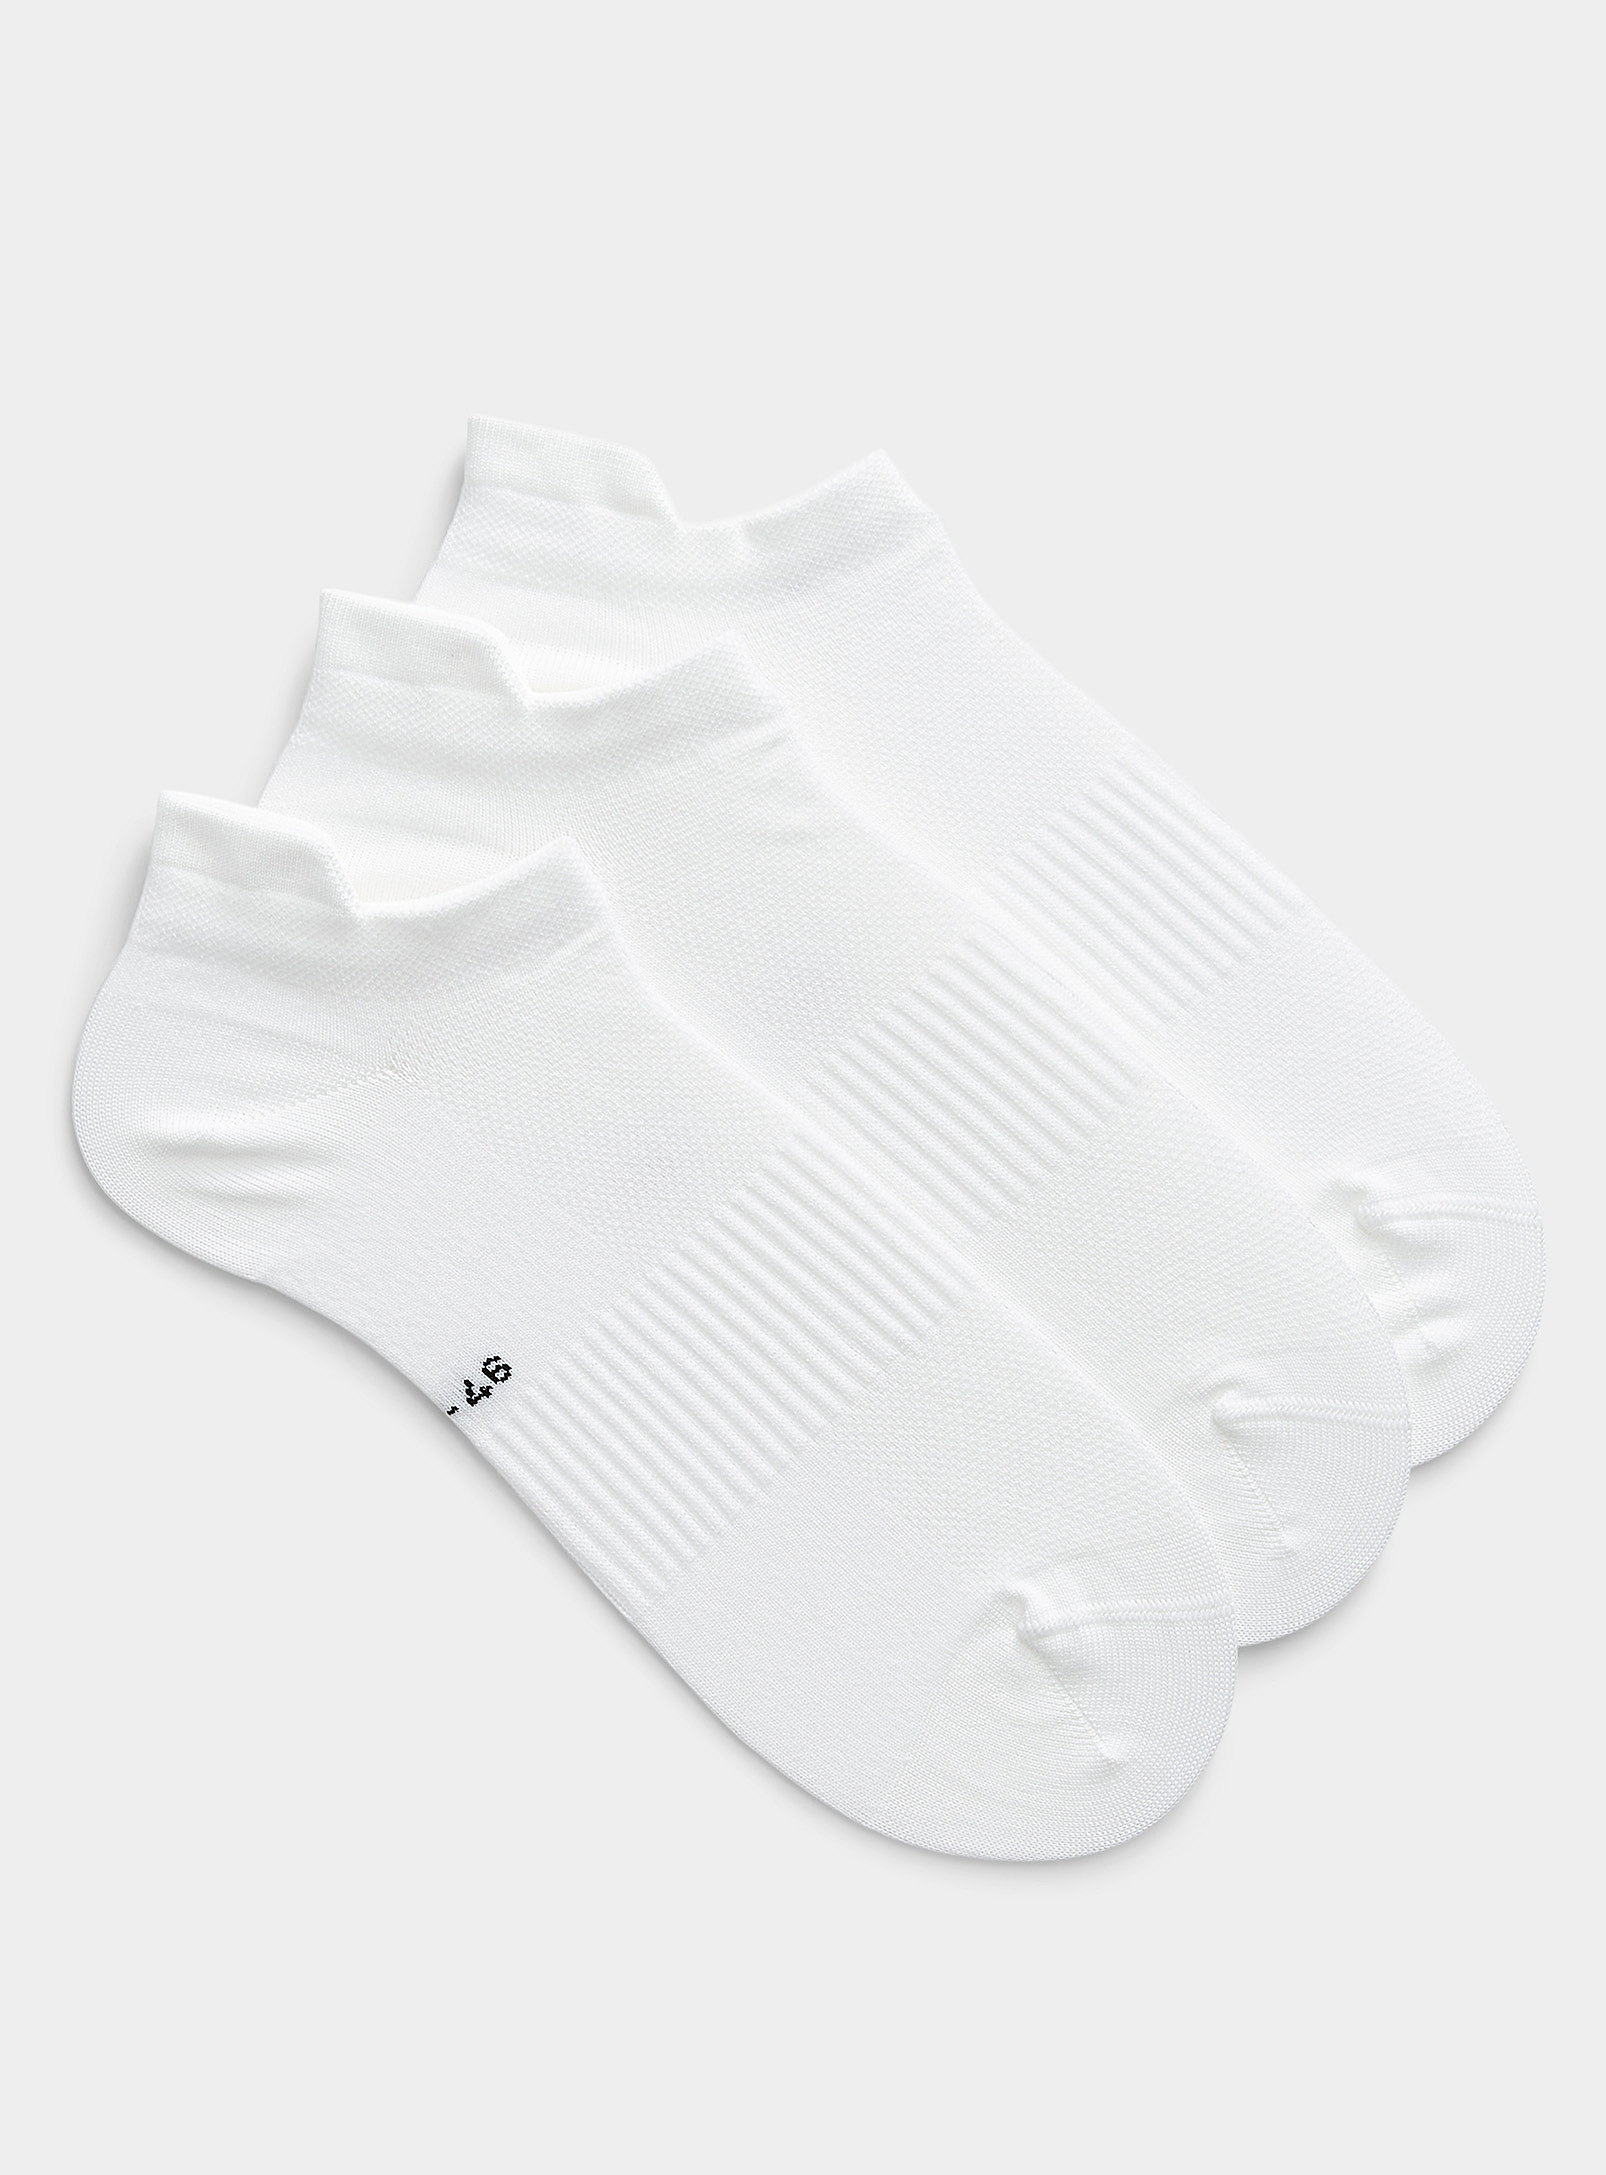 I.fiv5 Piqué Knit Multisport Socks Set Of 3 In White